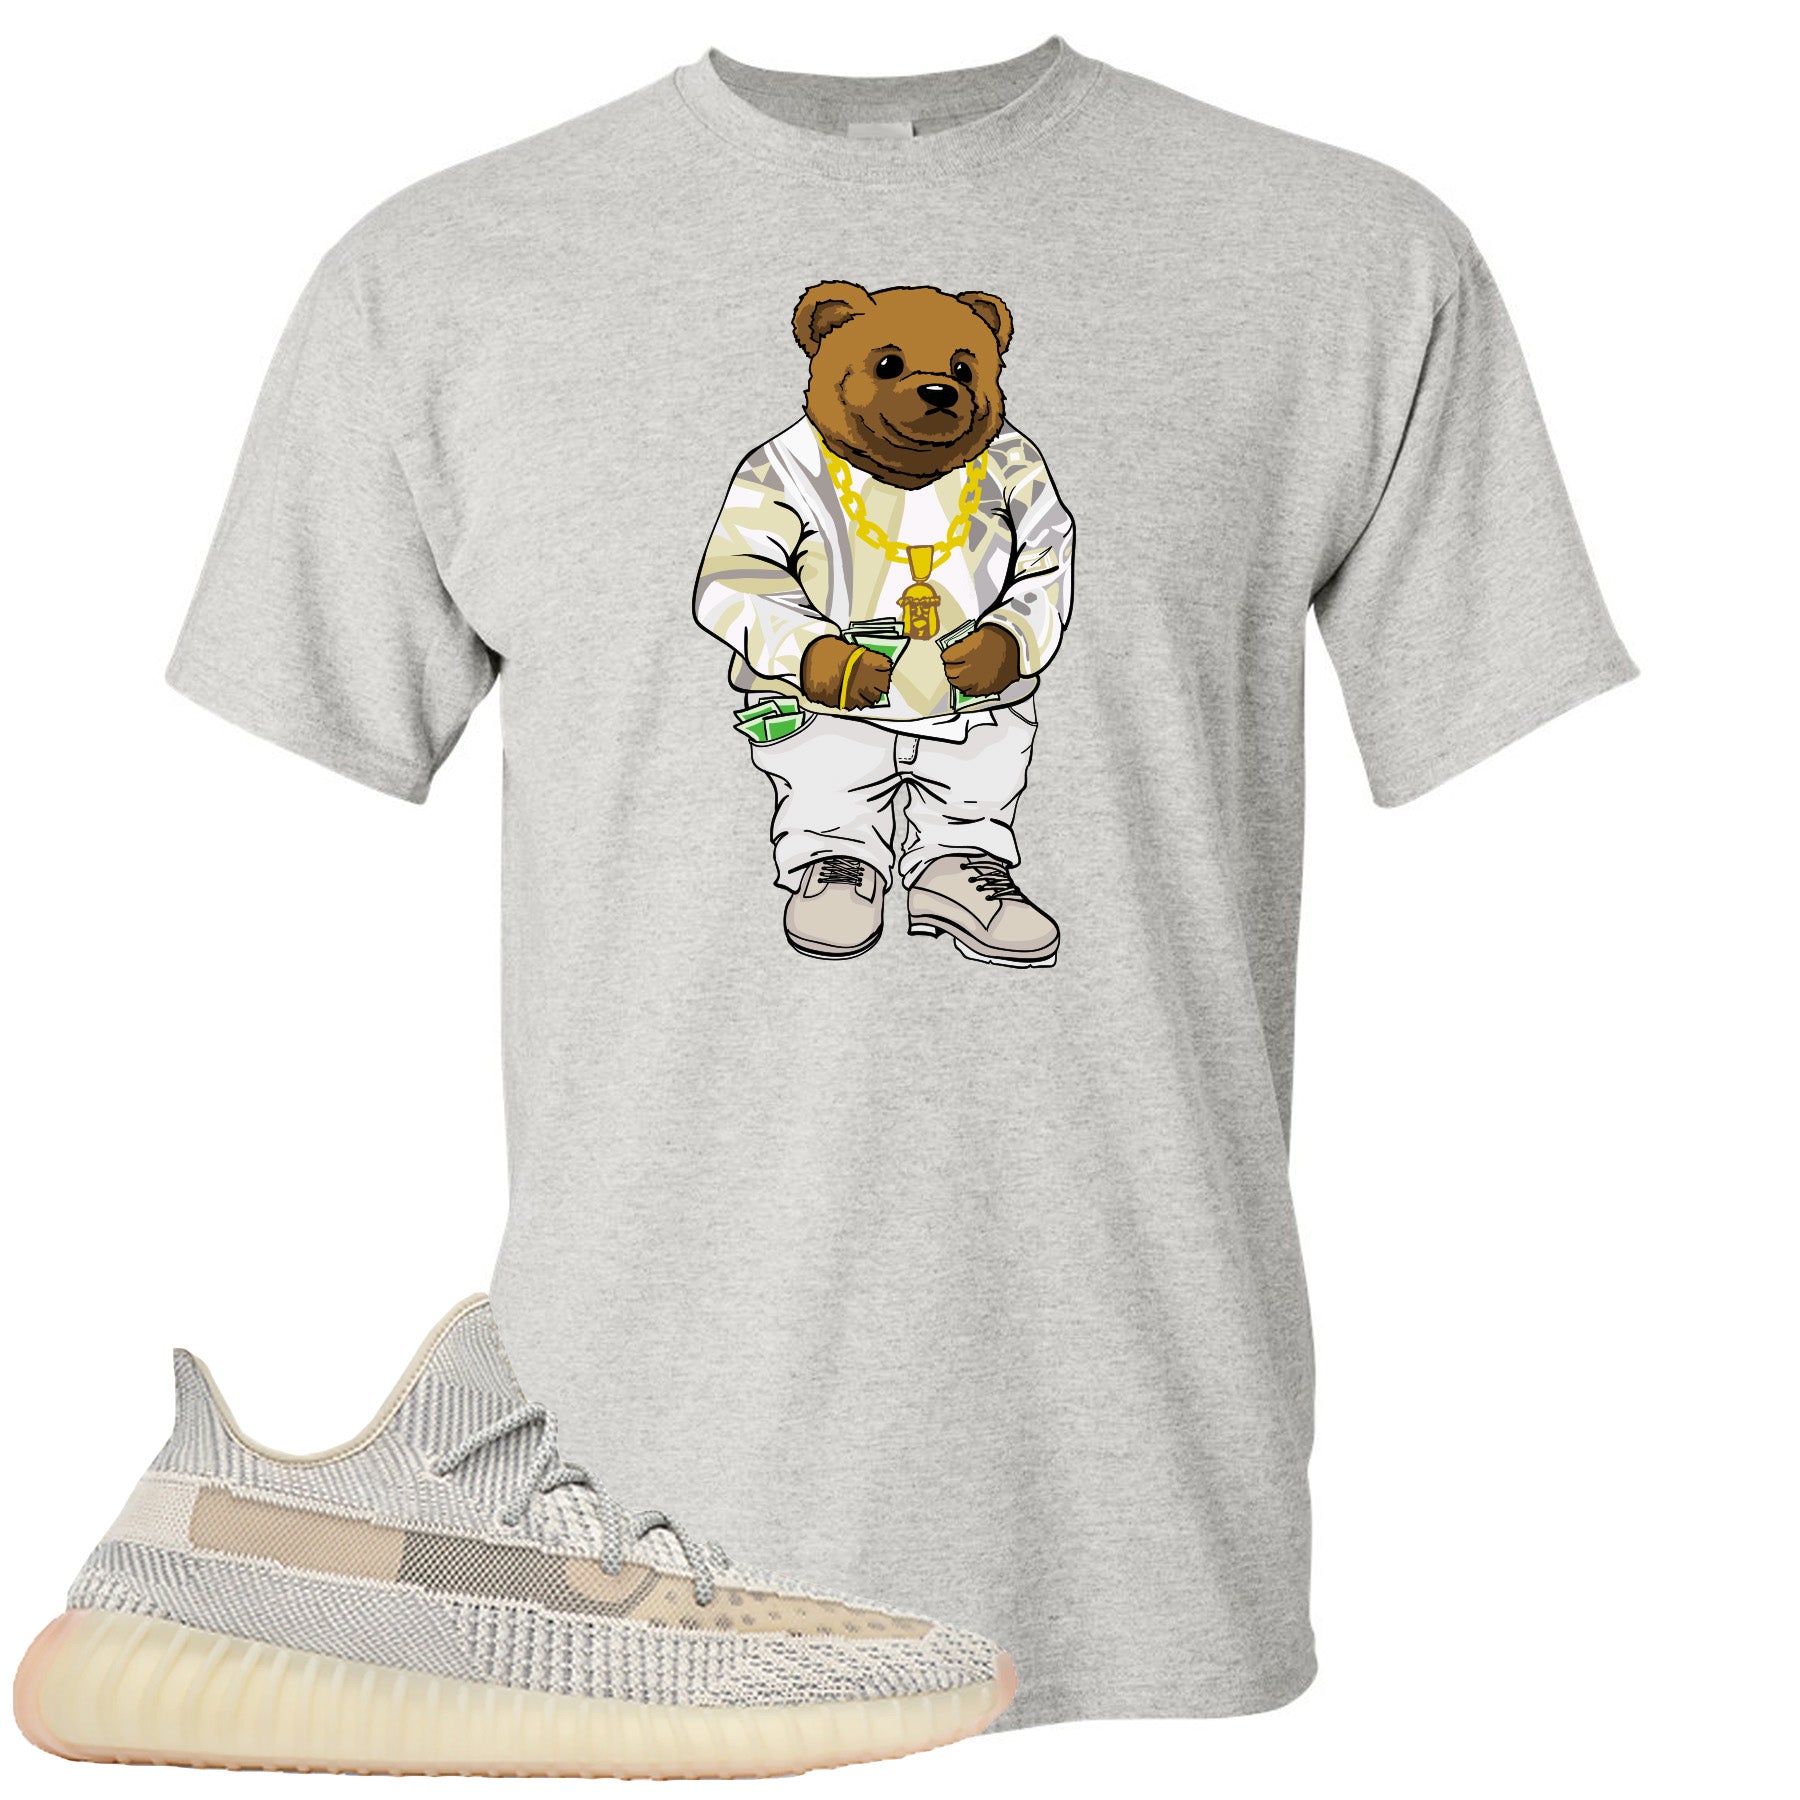 yeezy bear shirt